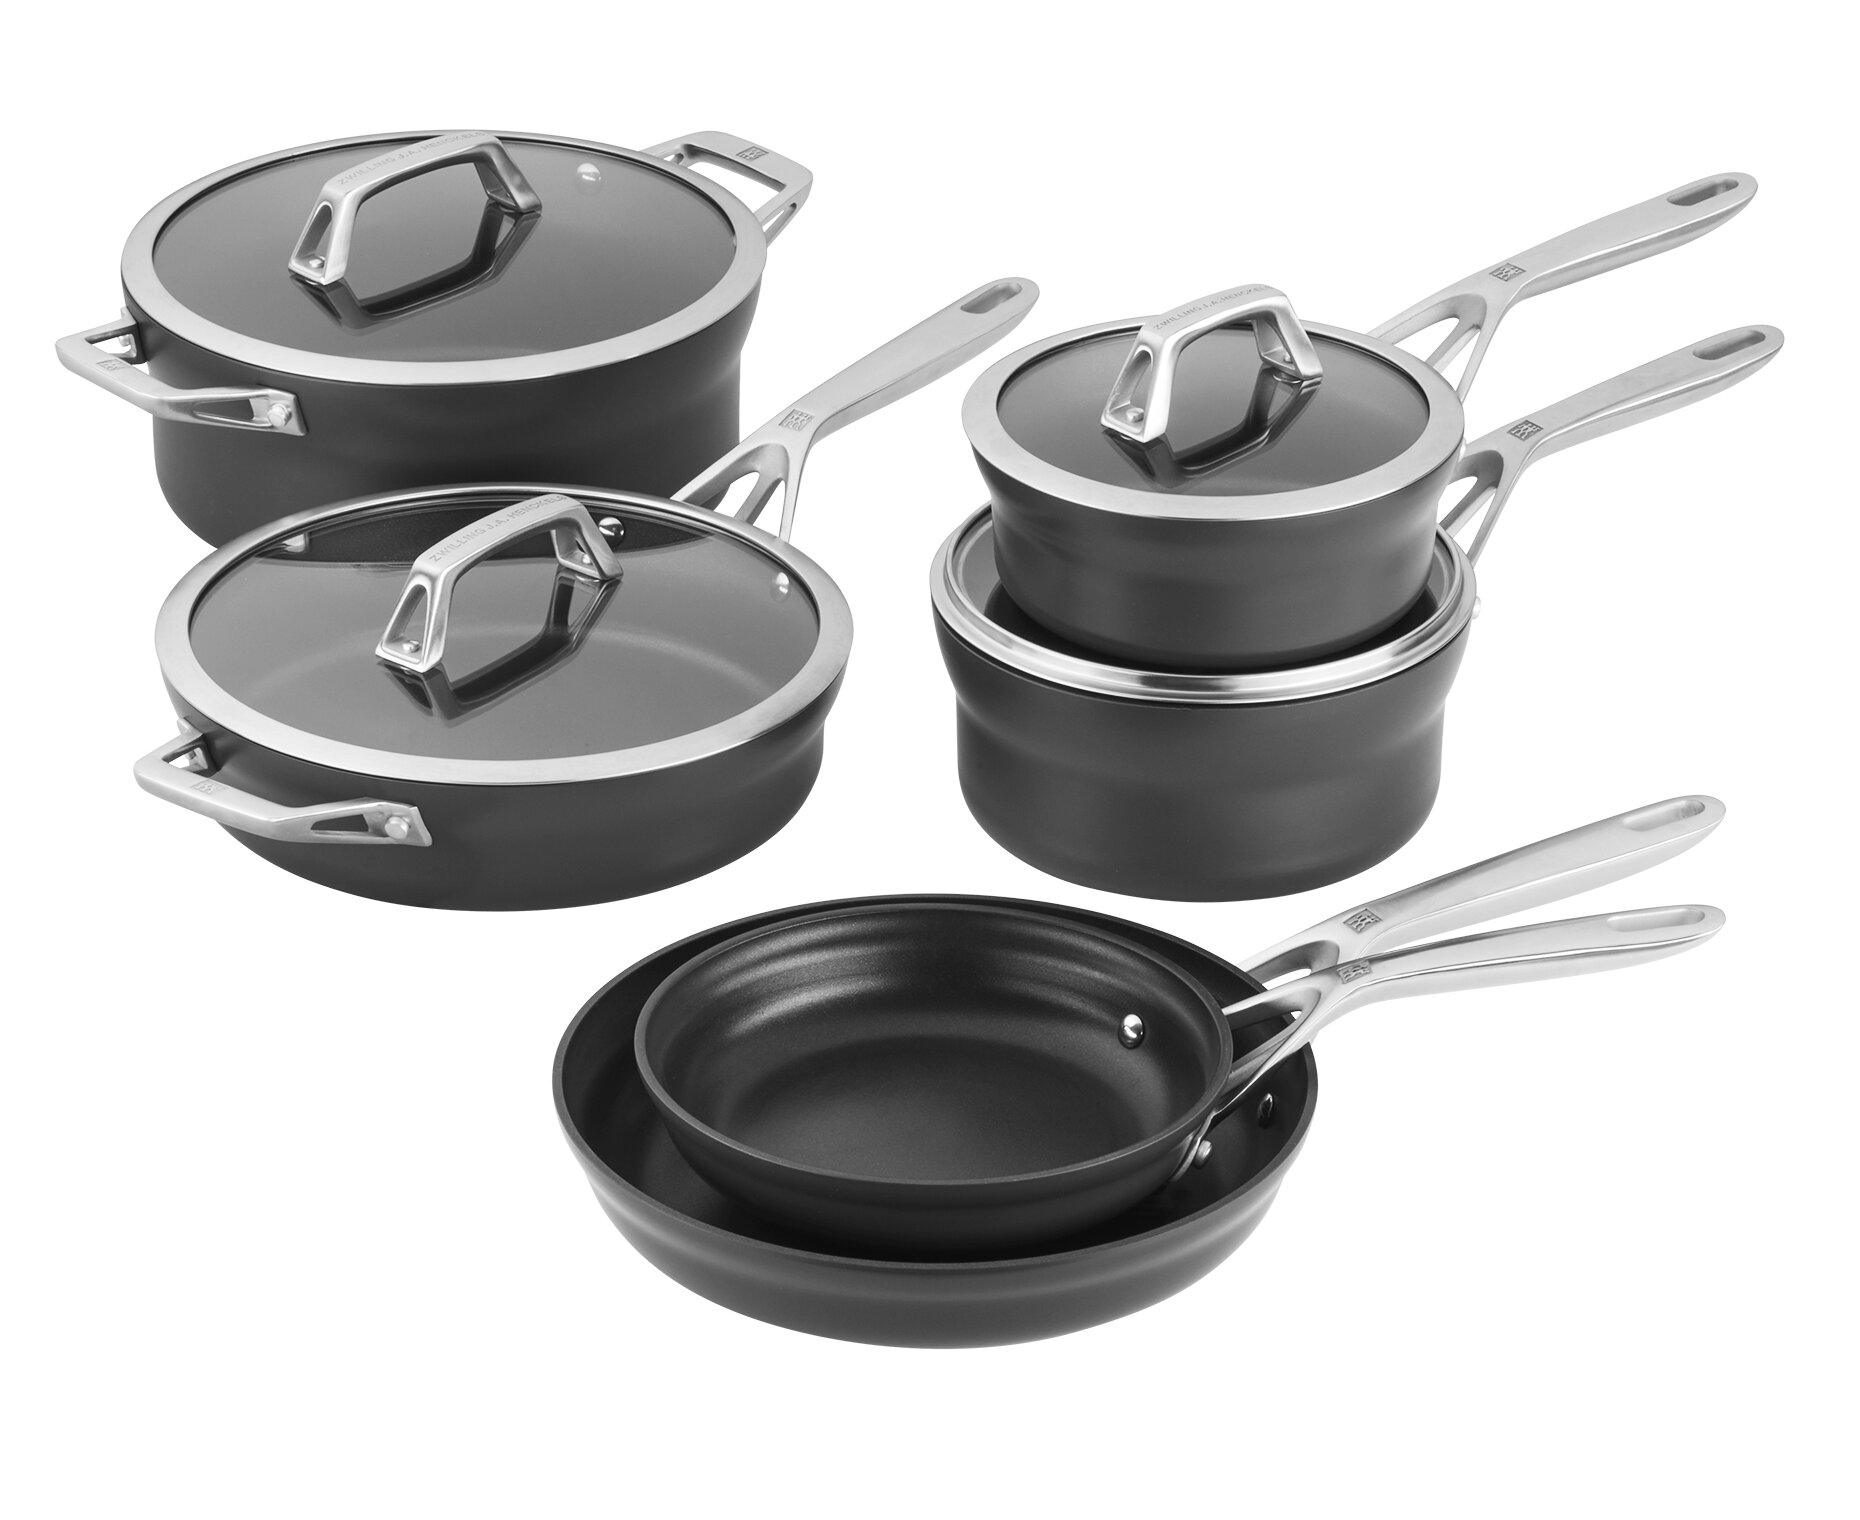 Zwilling J.A. Henckels Spirit 10-Piece Stainless Steel Cookware Set